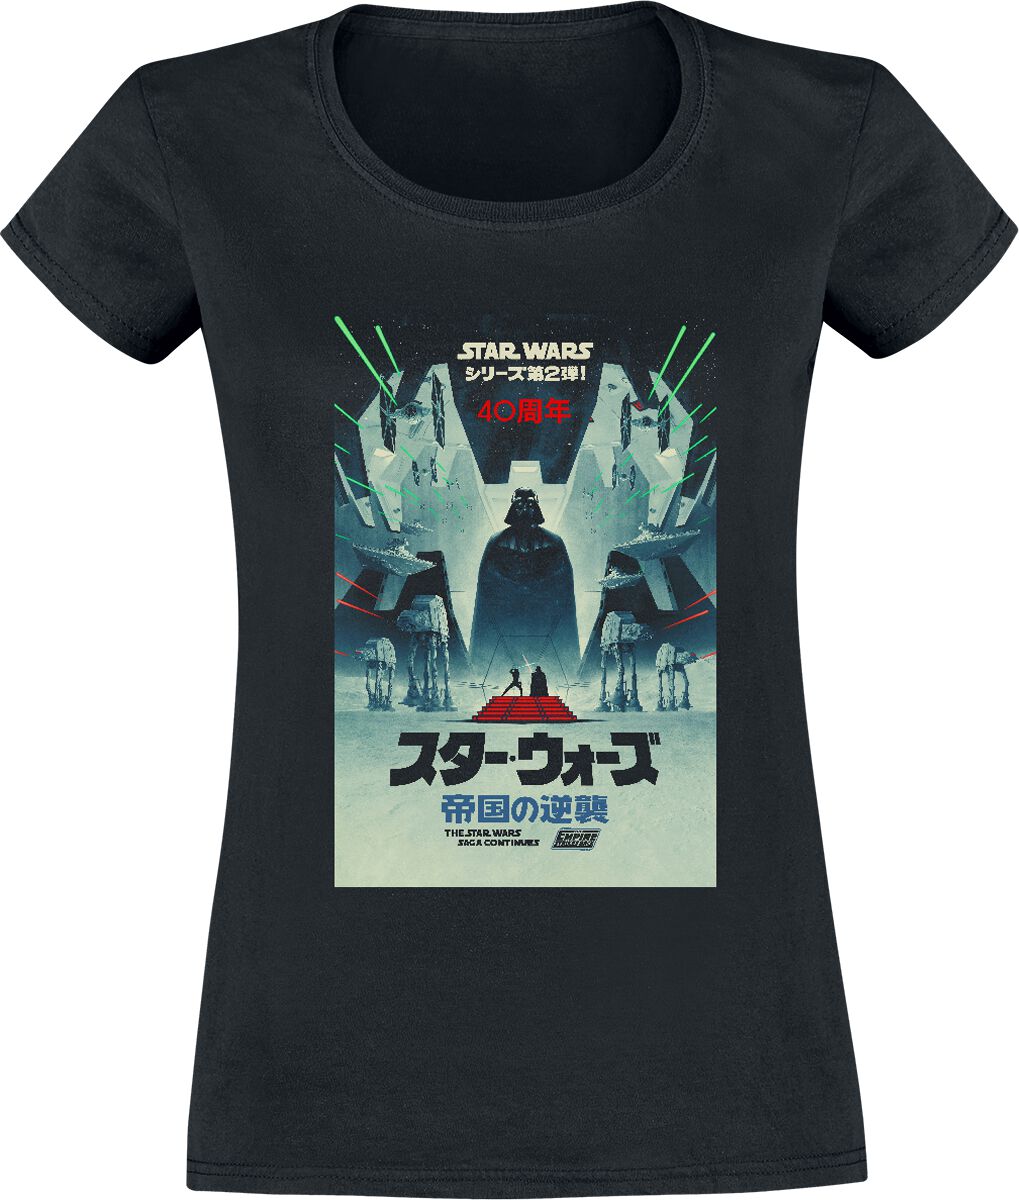 Star Wars Japanese Poster T-Shirt black